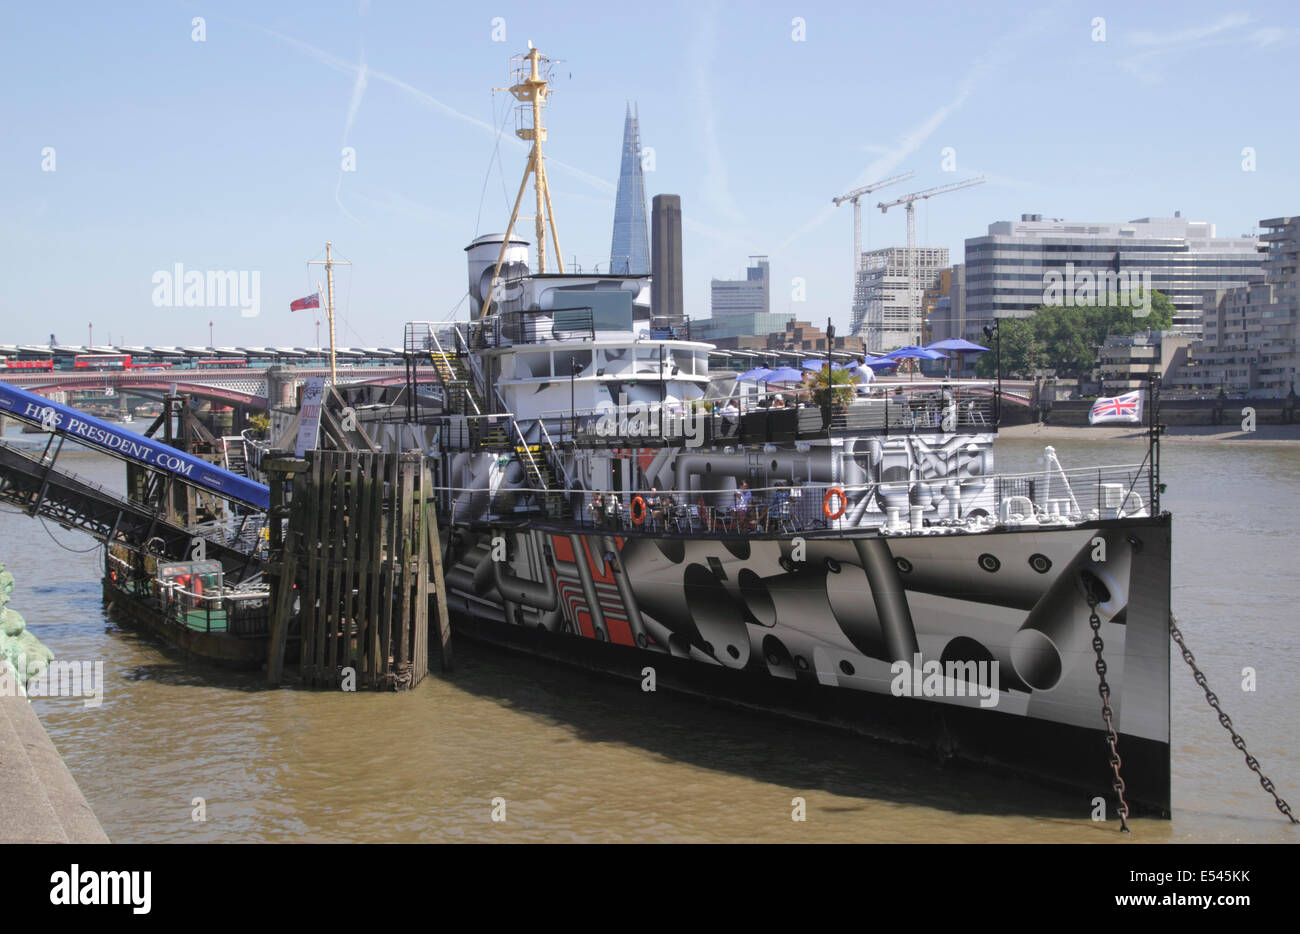 HMS President am Londoner Victoria Embankment vor kurzem im Dazzle Camouflage Juli 2014 neu lackiert Stockfoto